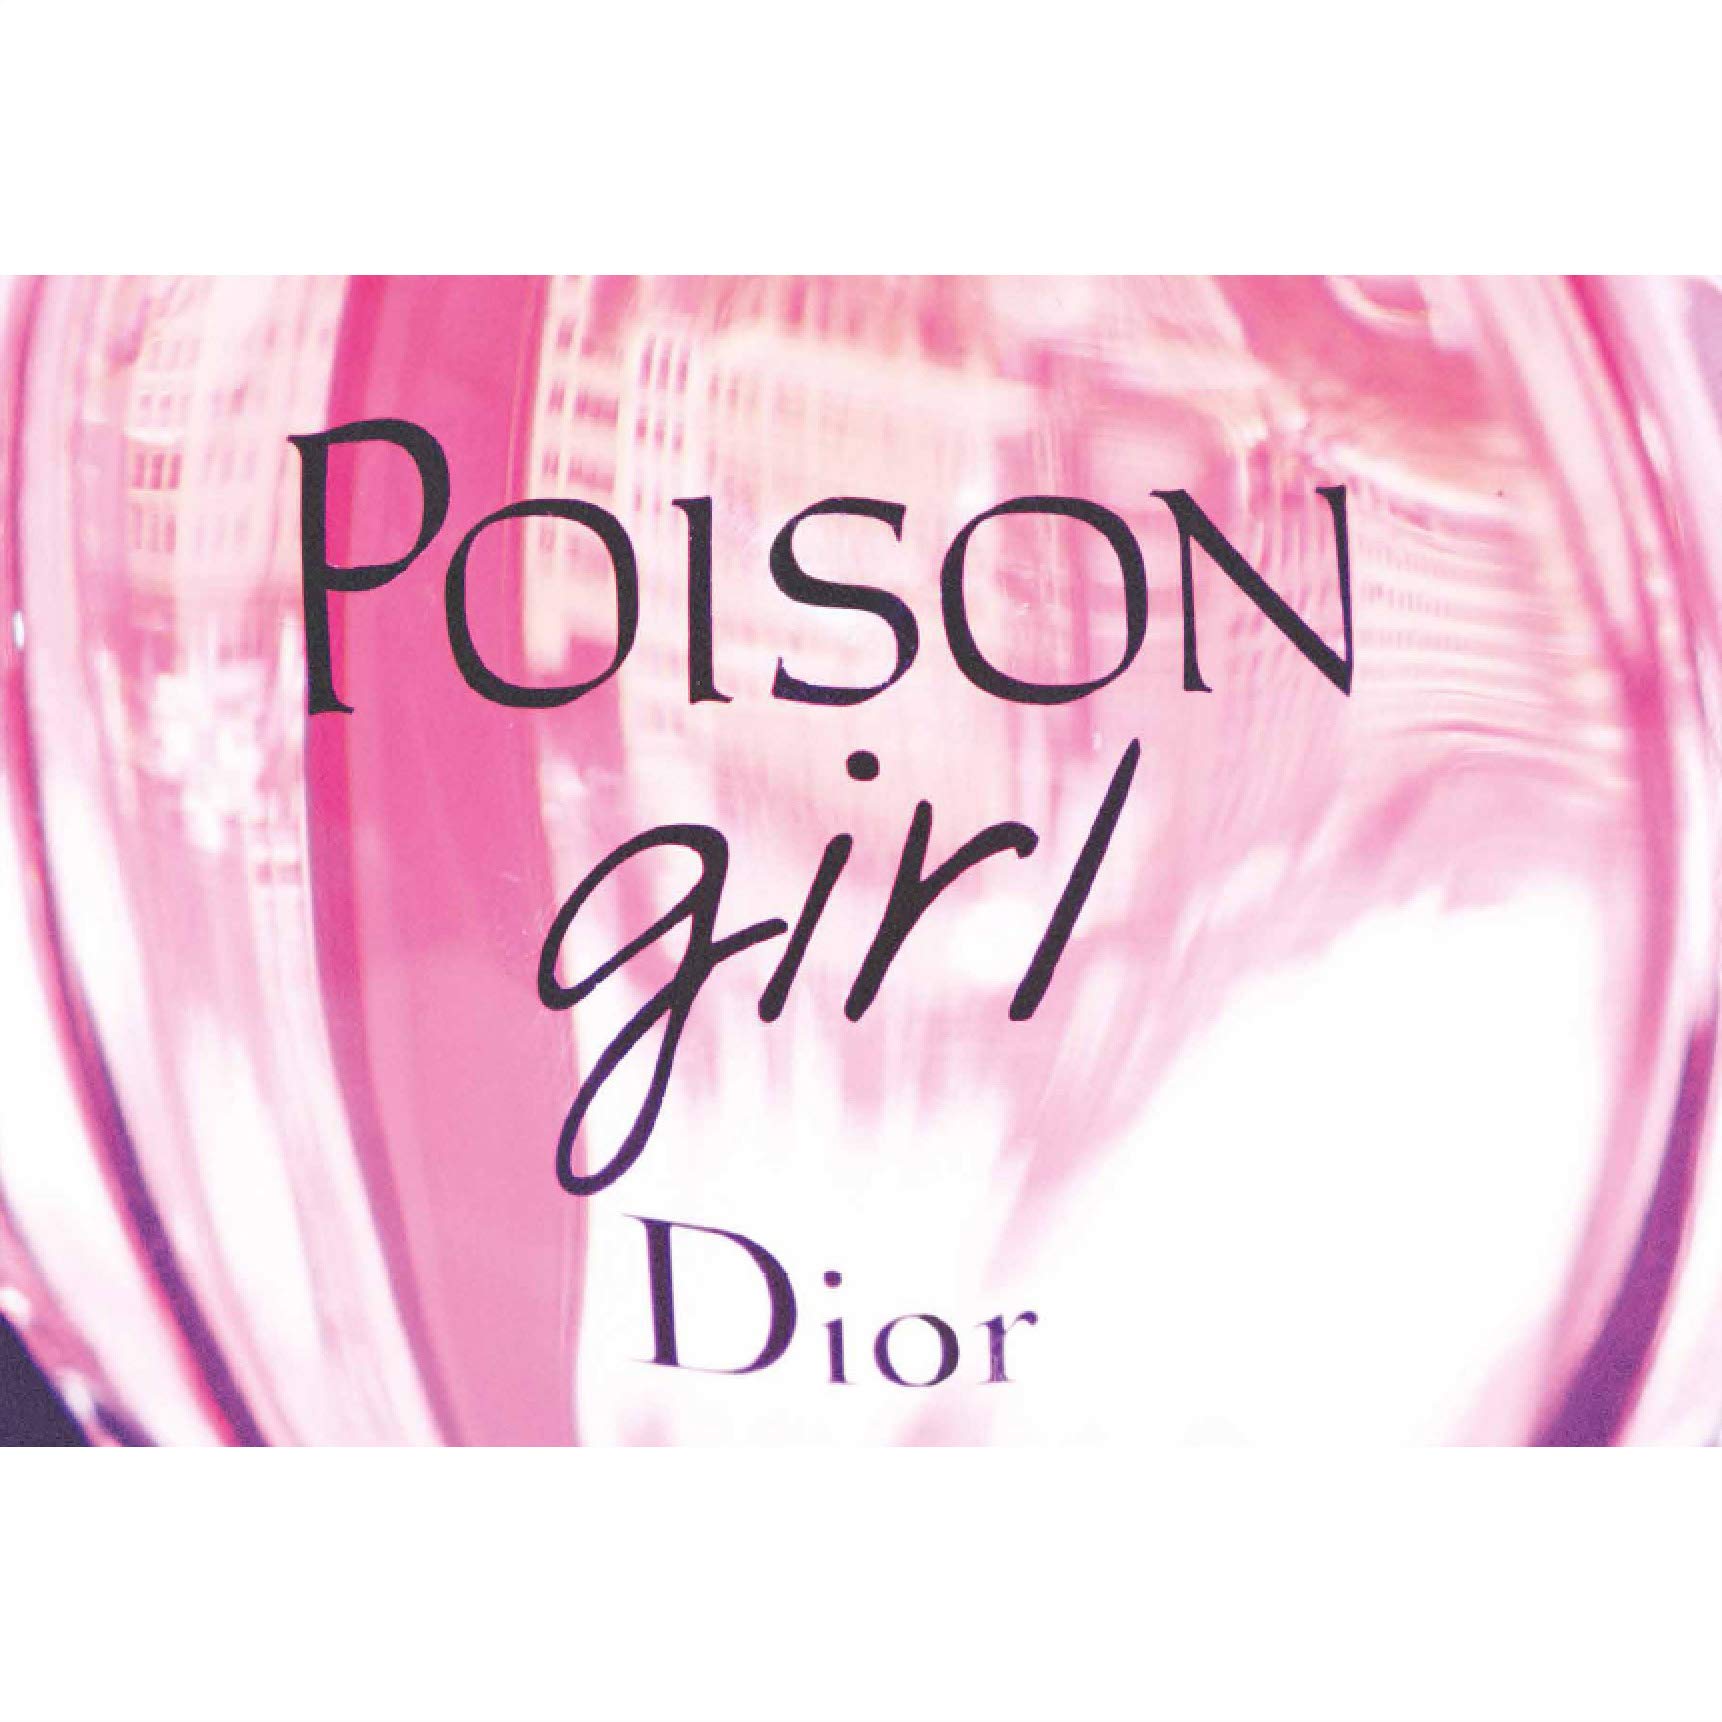 Christian Dior Poison Girl Eau De Parfum Spray 3.4 Oz/ 100 Ml for Women By Christain Dior, 3.4 Fl. Oz